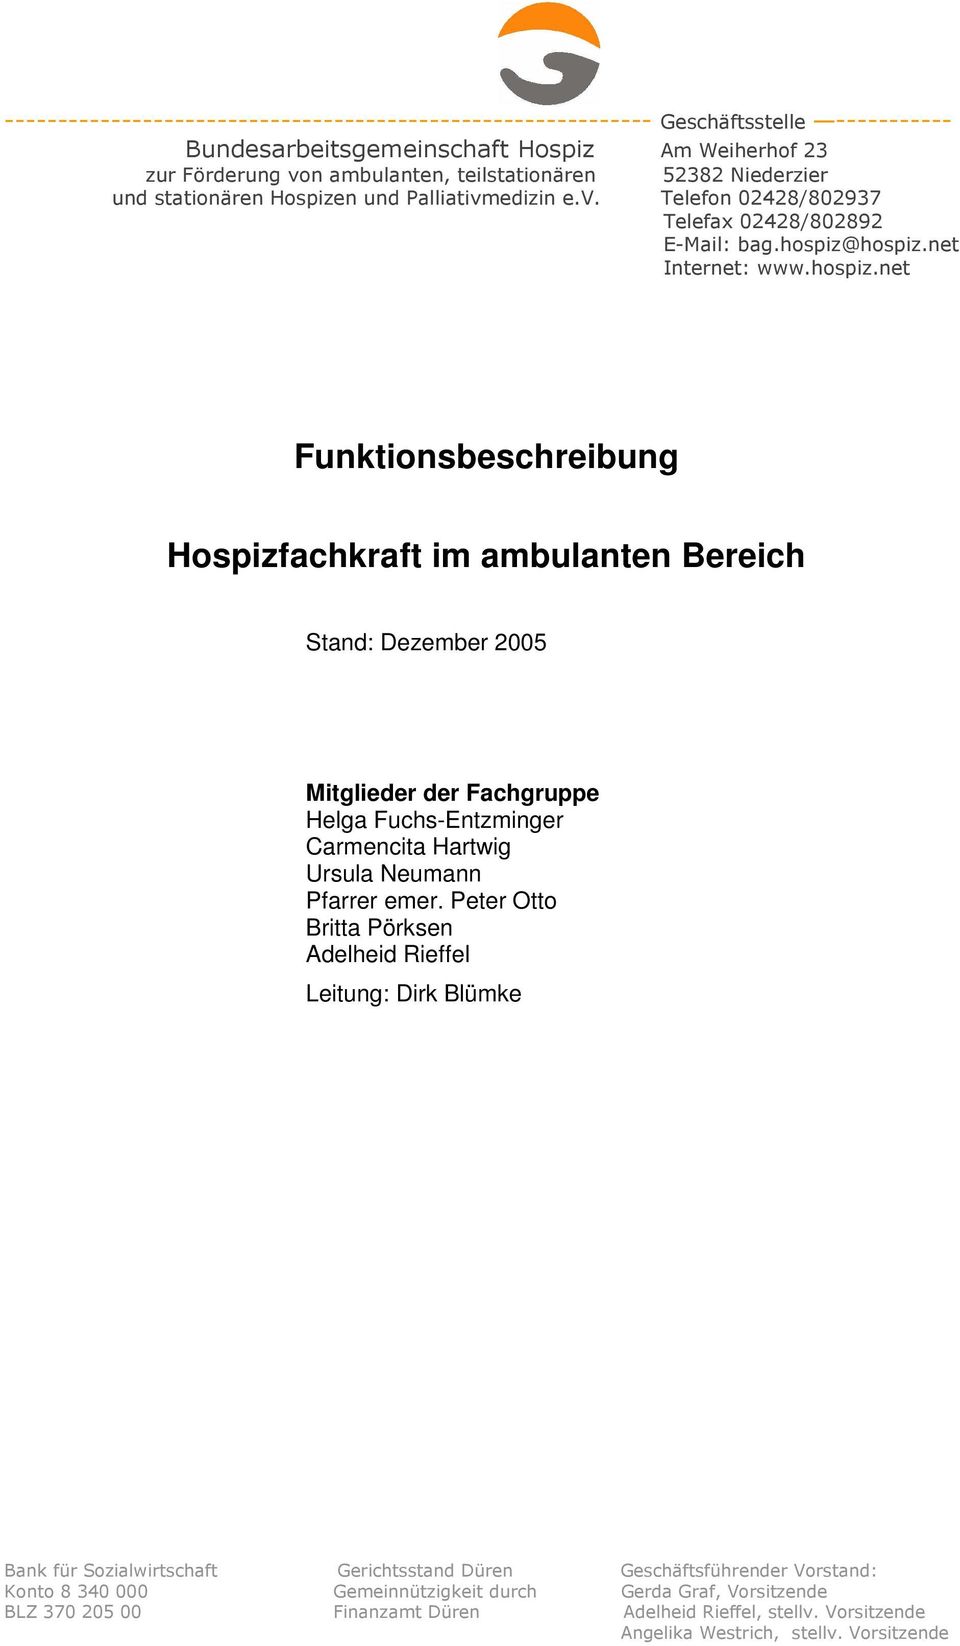 Fuchs-Entzminger Carmencita Hartwig Ursula Neumann Pfarrer